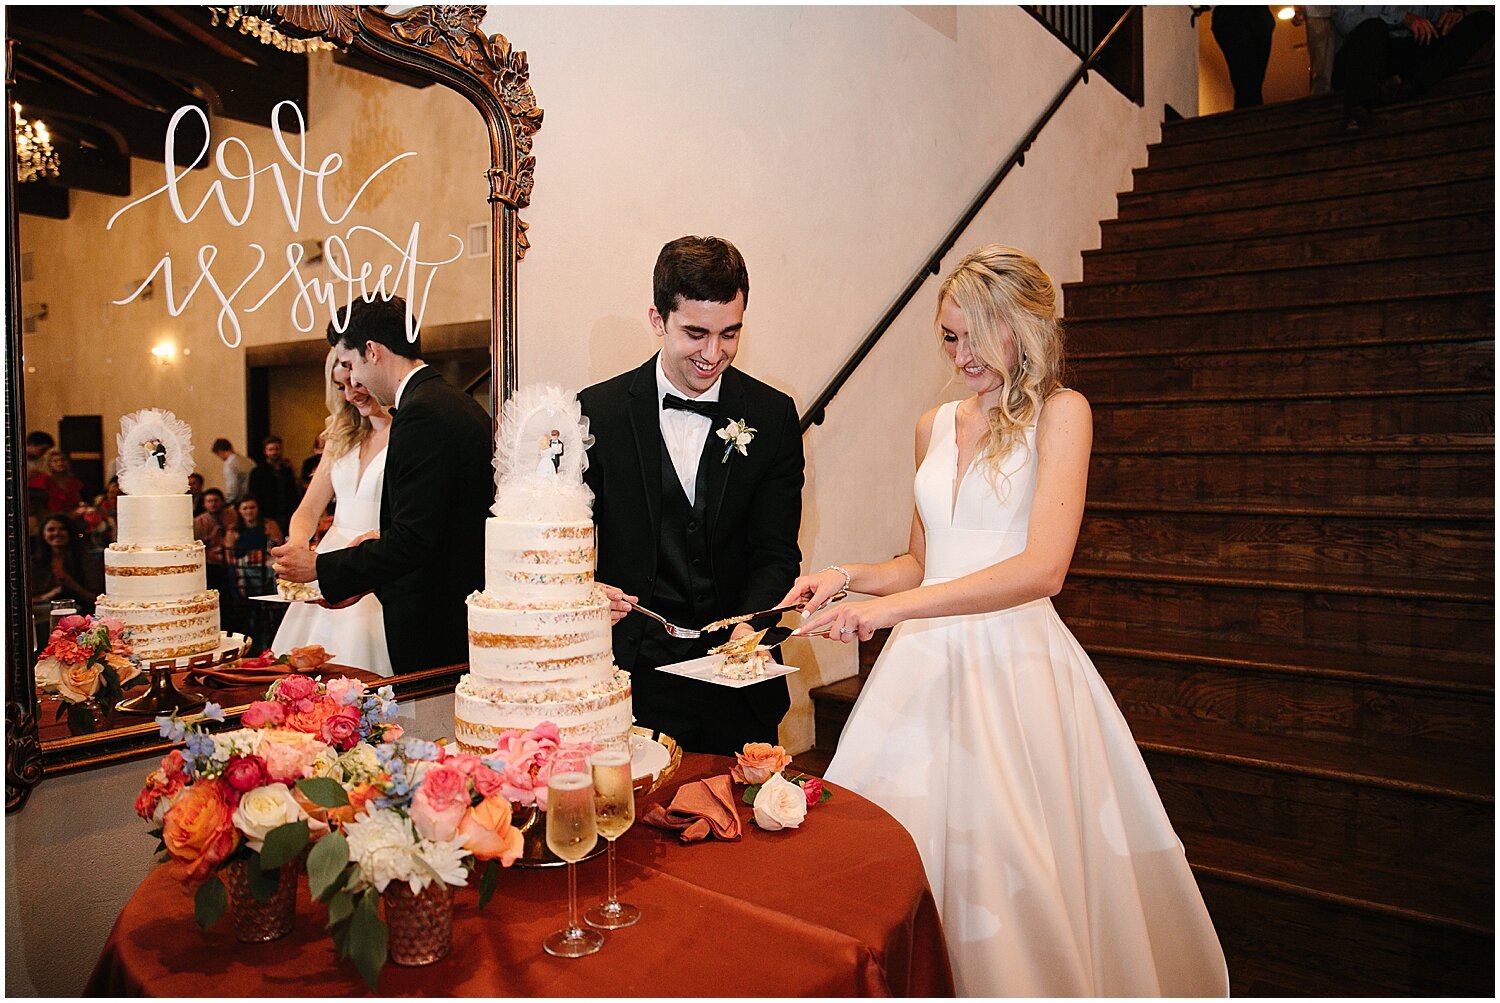  bride and groom cut their wedding cake  